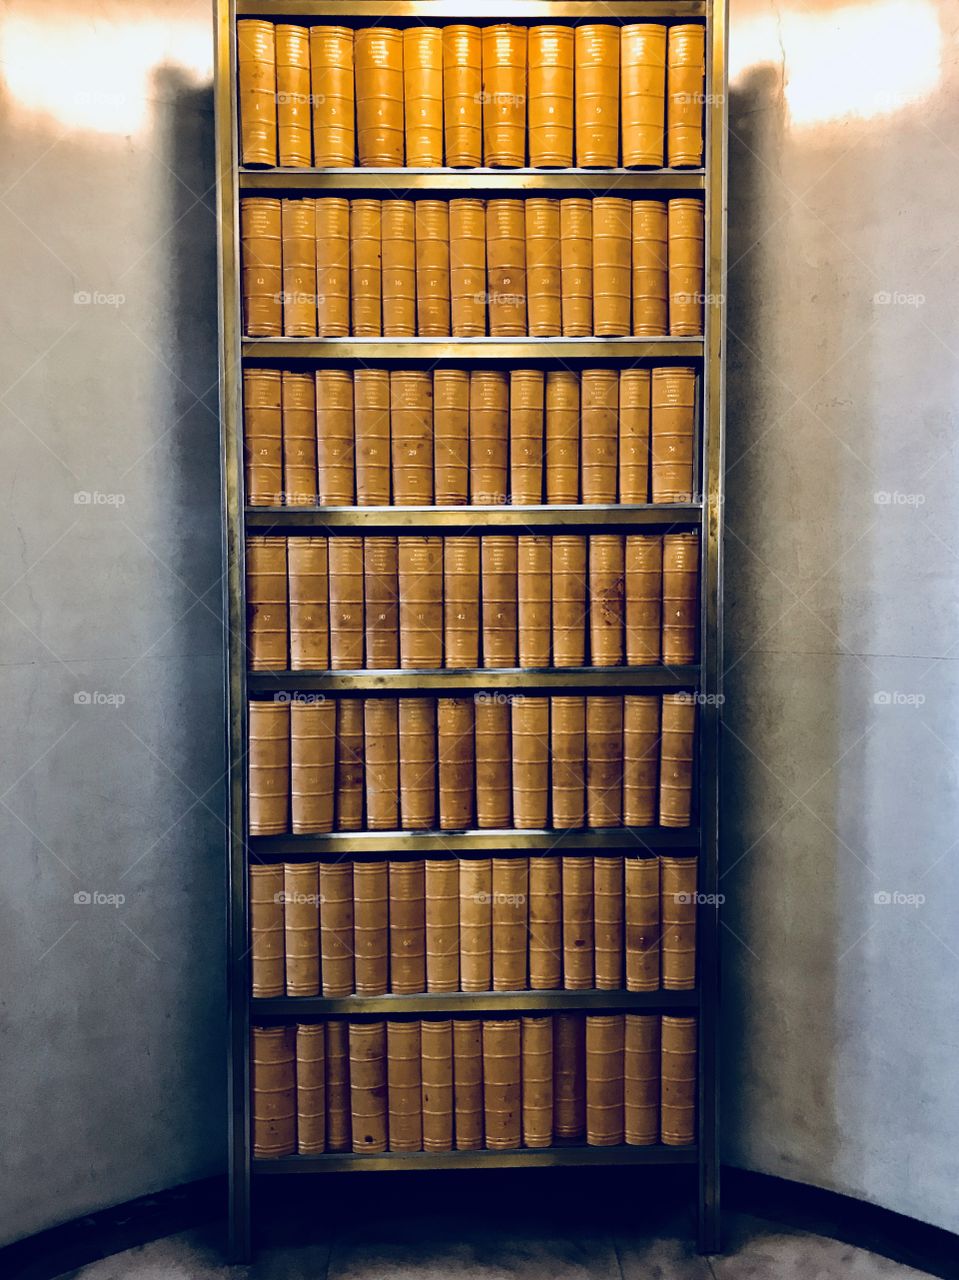 A metallic bookshelf with old books 